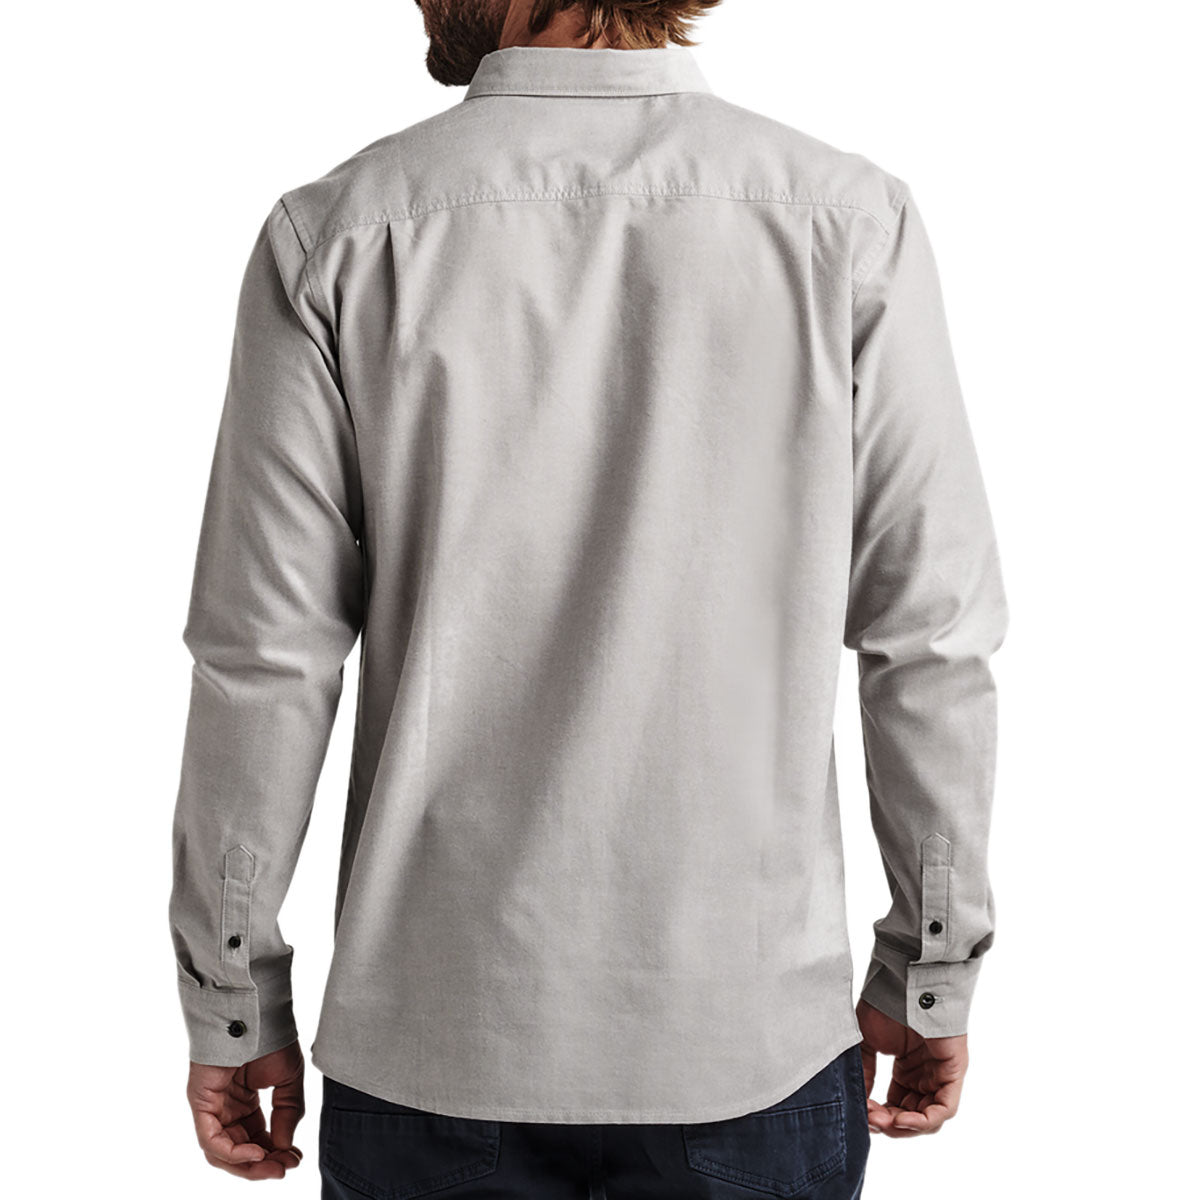 Roark Scholar Long Sleeve Shirt - Smoke image 2